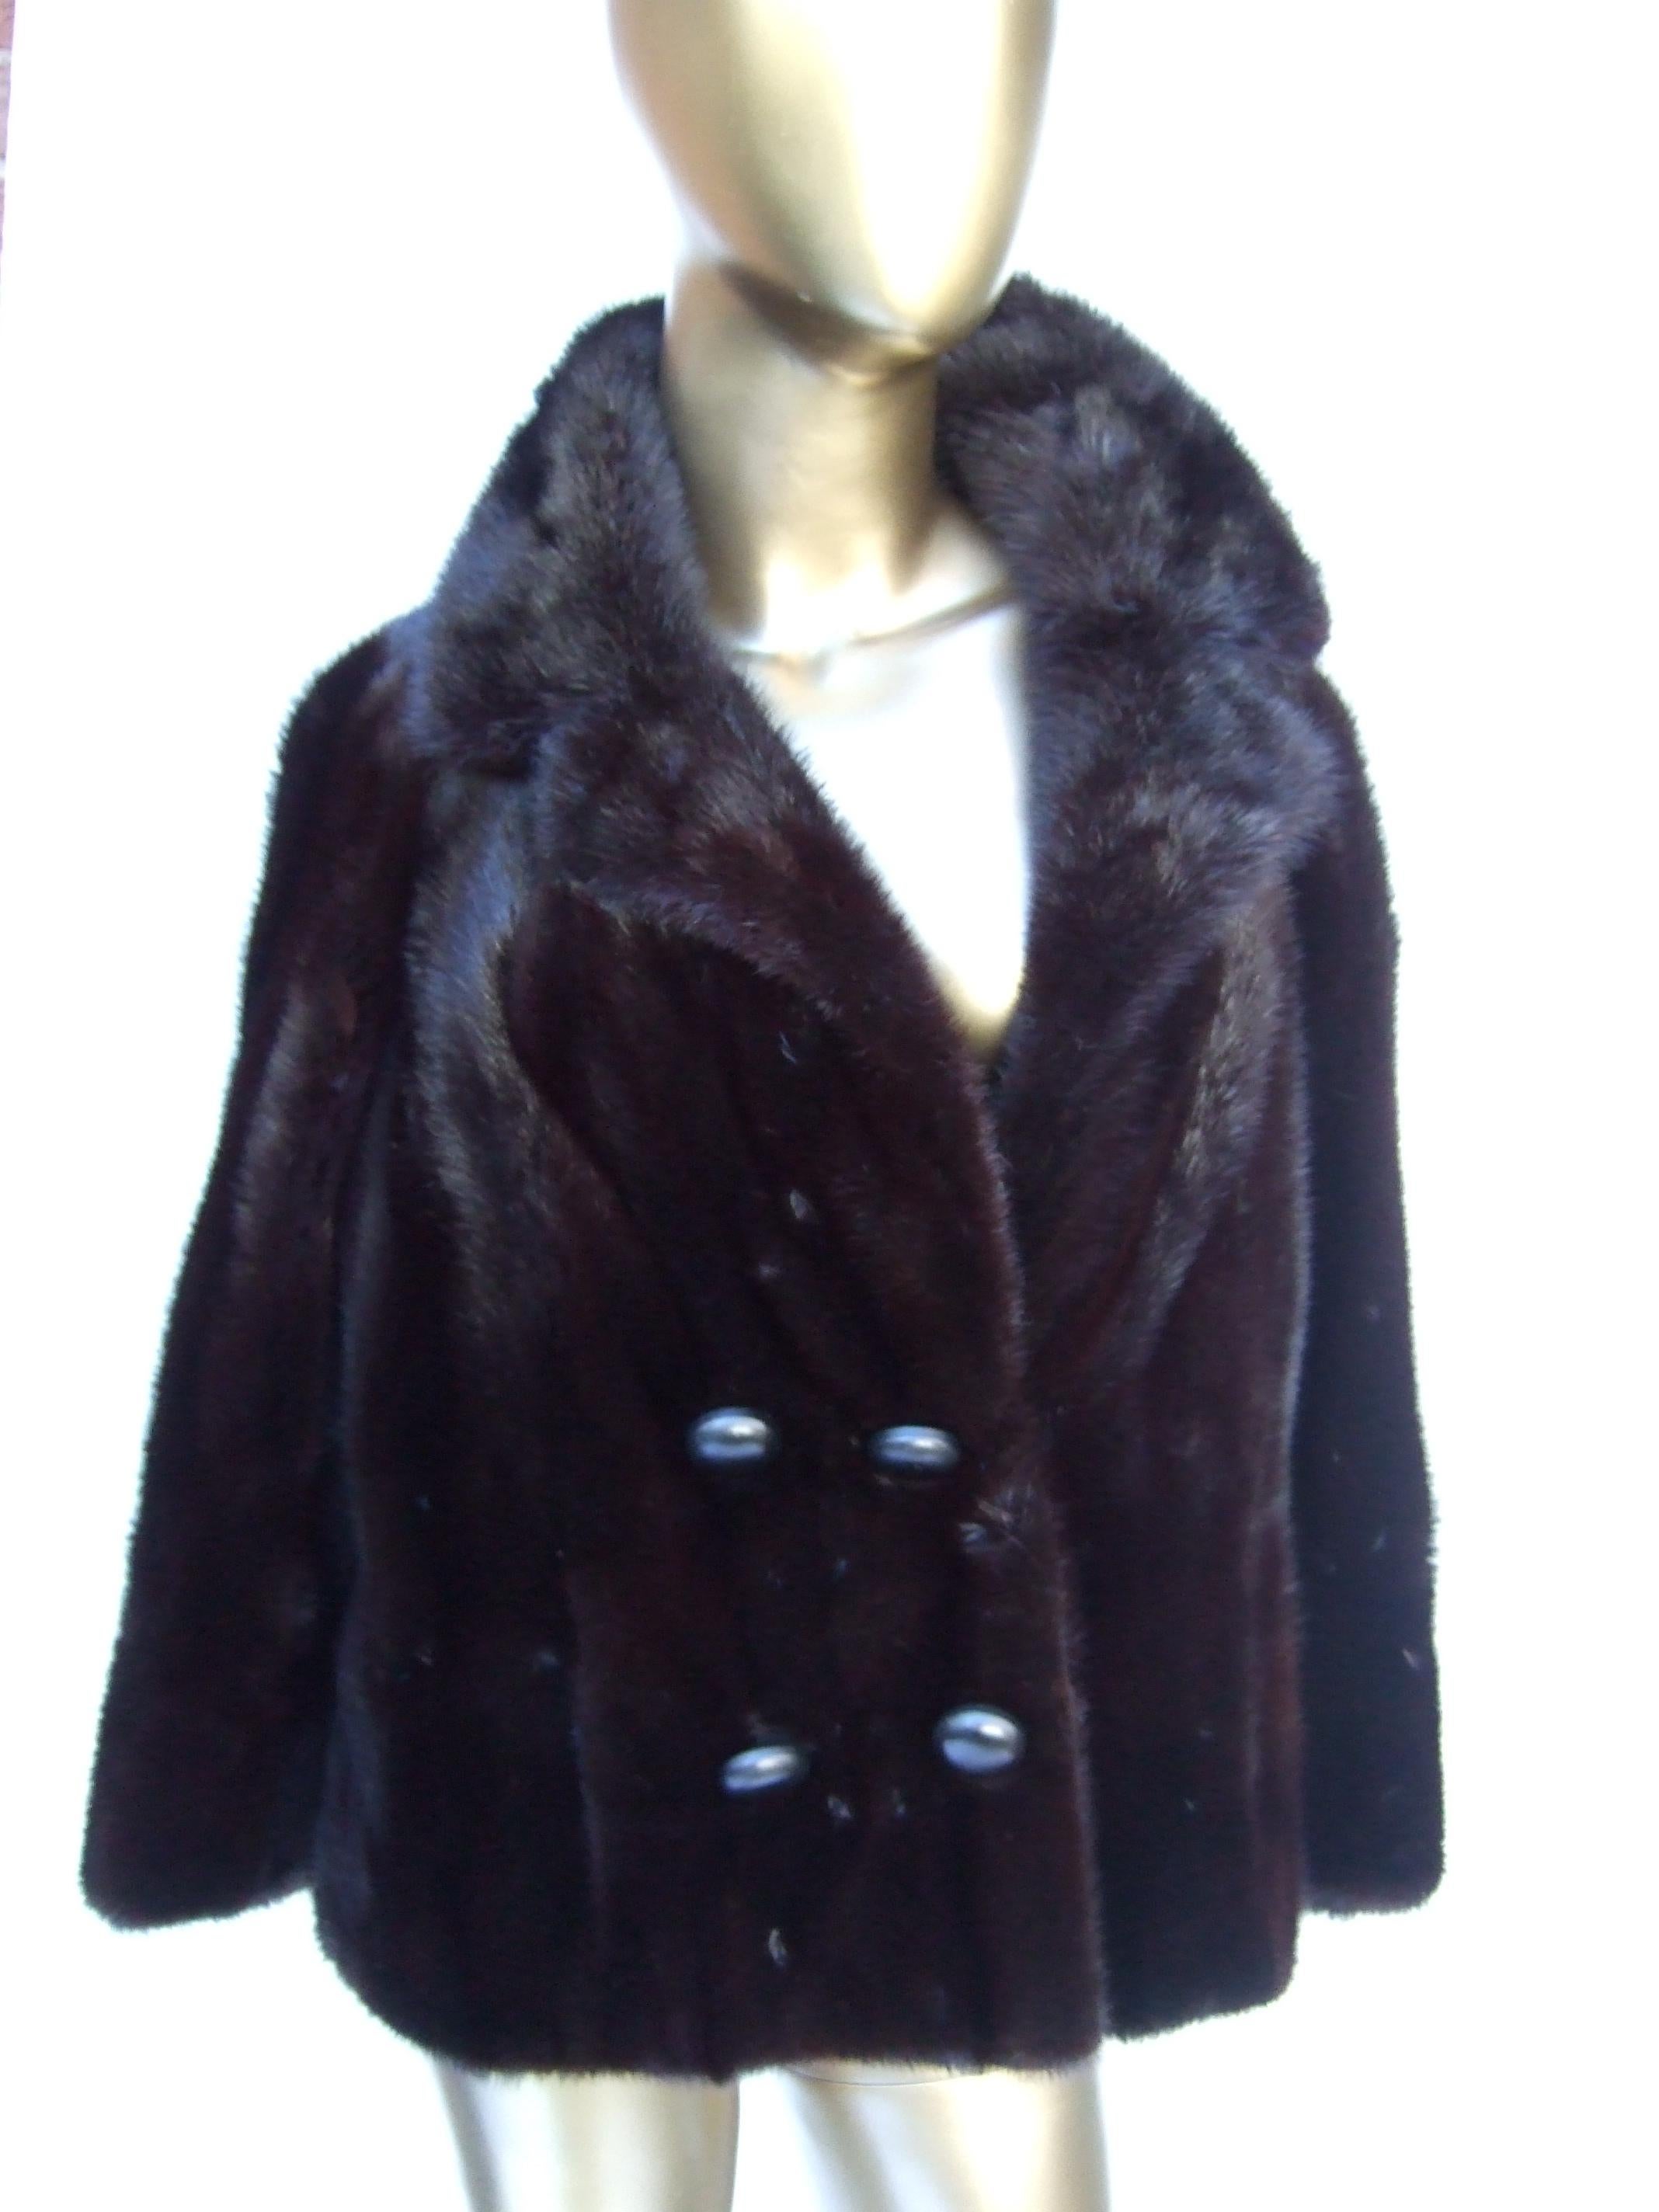 Luxurious Mahogany Plush Dark Brown Mink Fur Jacket by Bill Marre' c 1970s  6